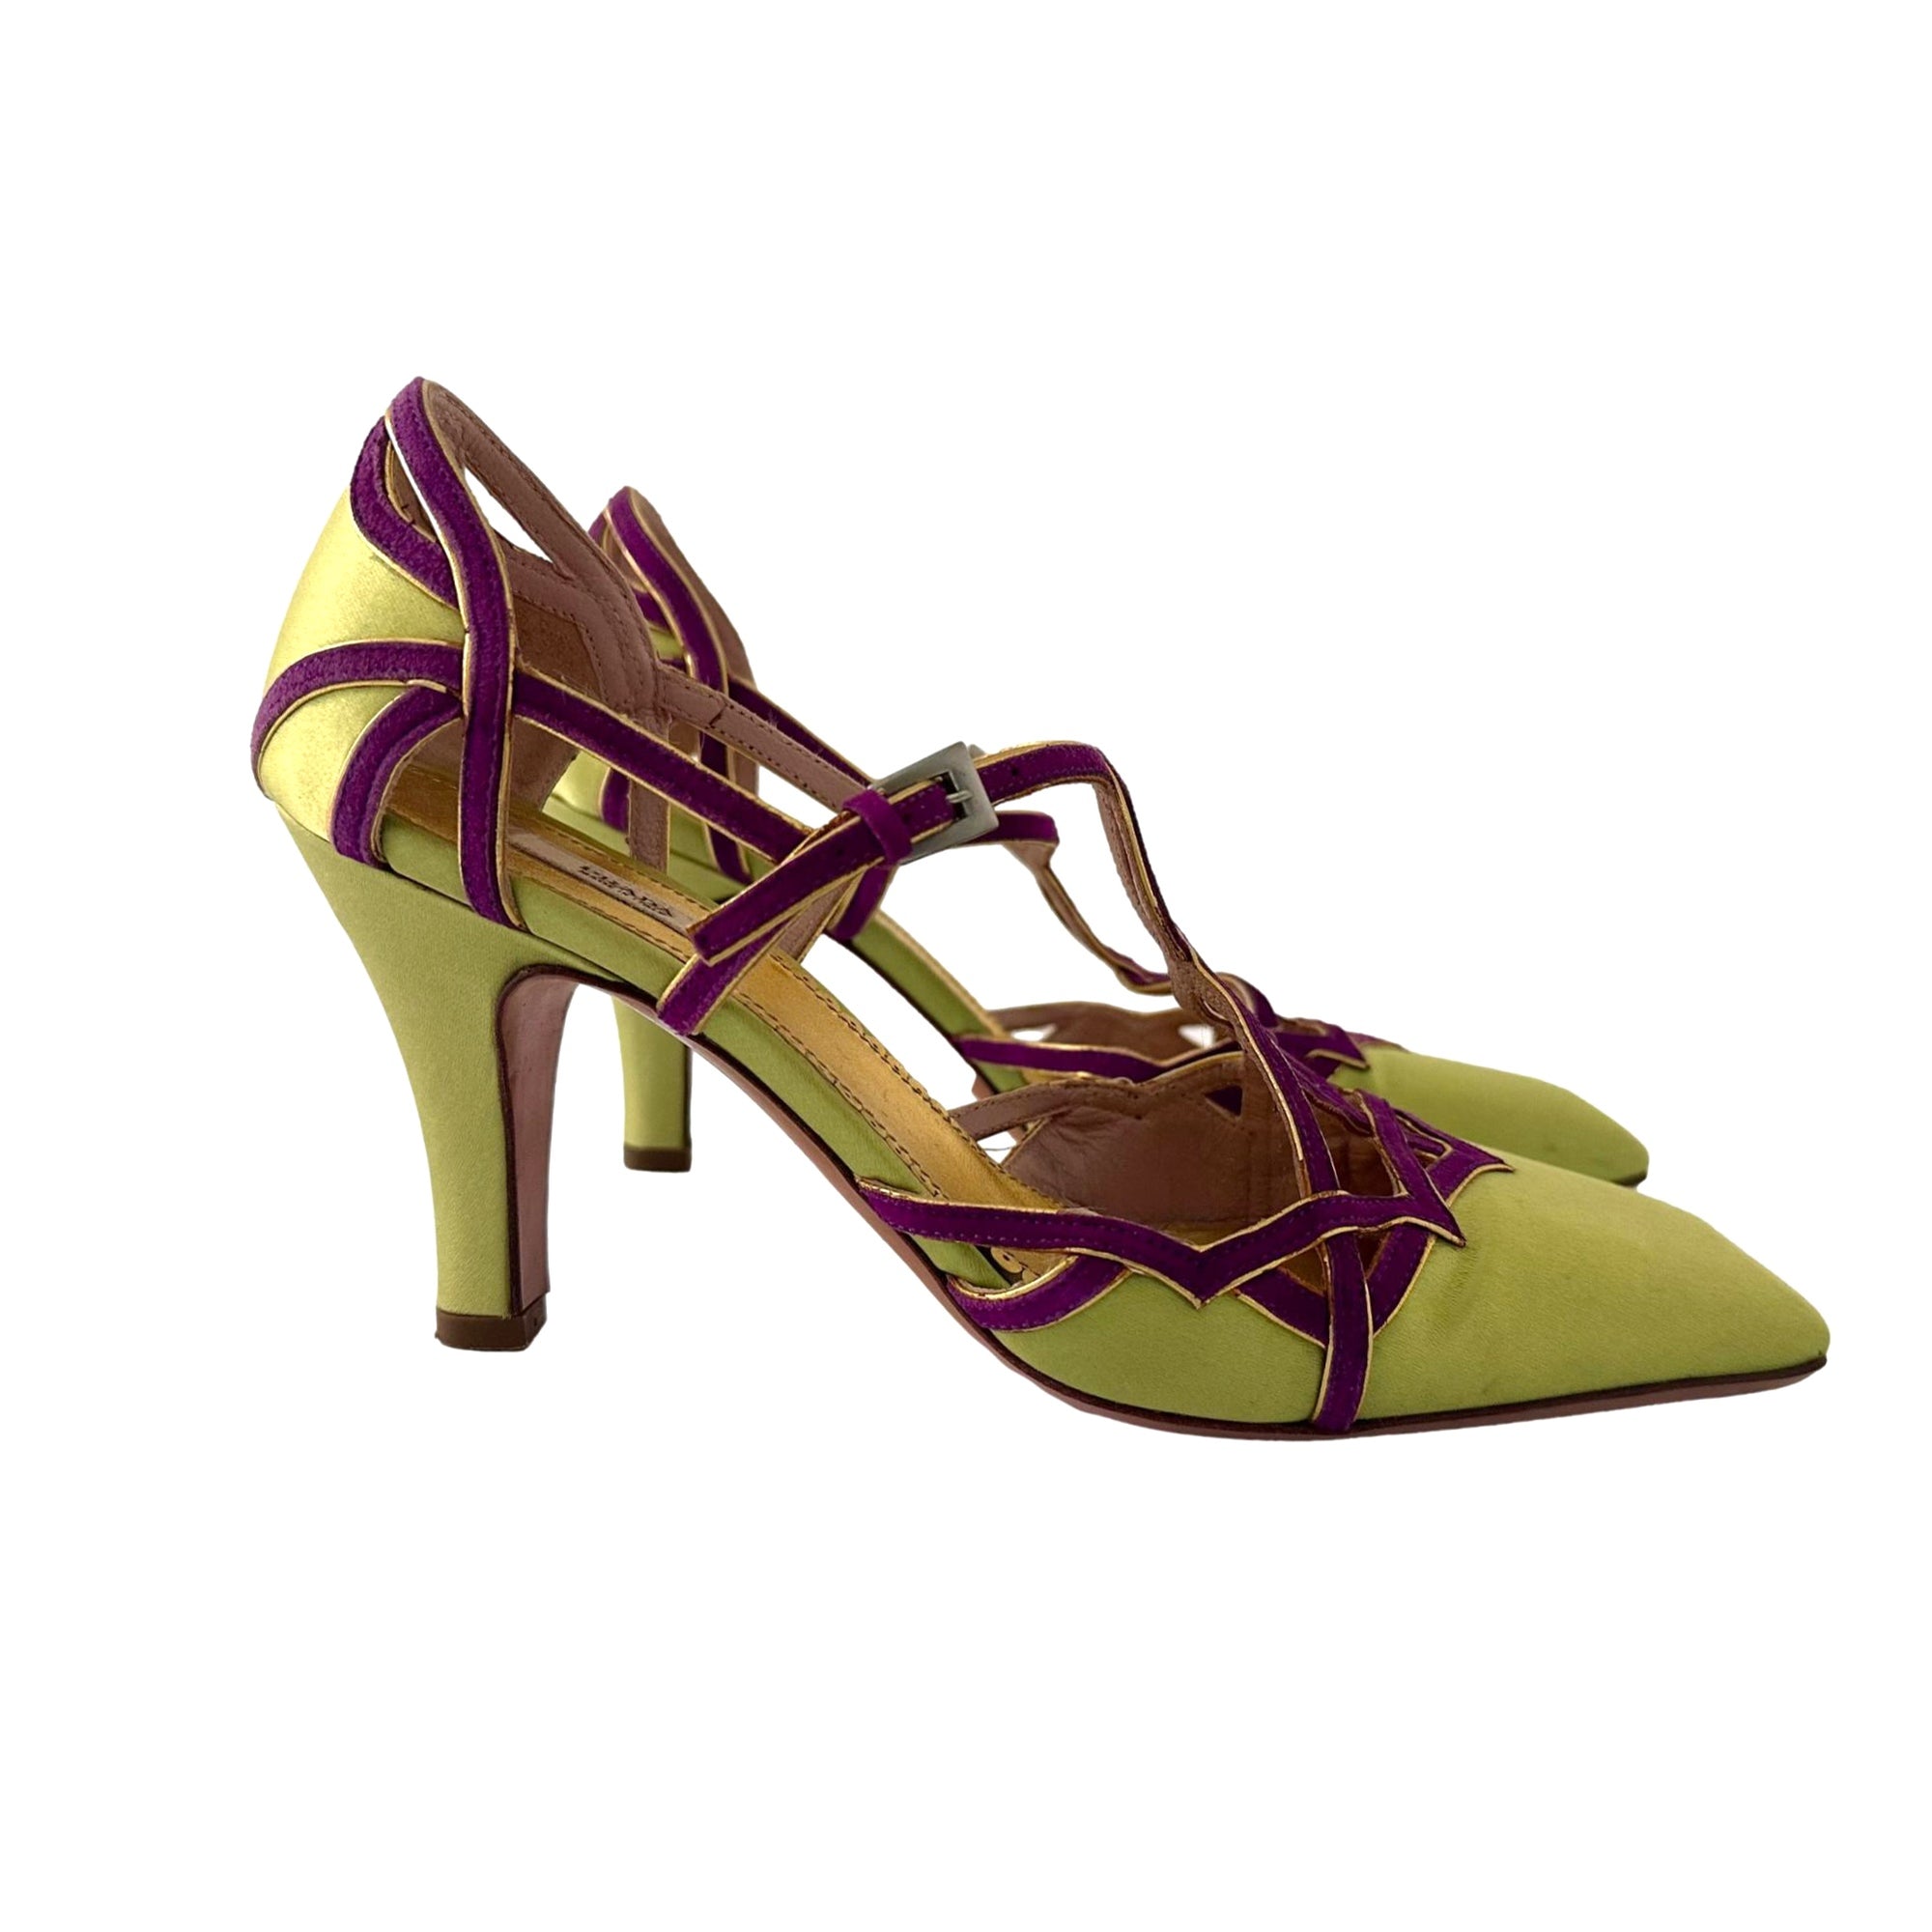 Prada Lime Green and Purple Satin Heels